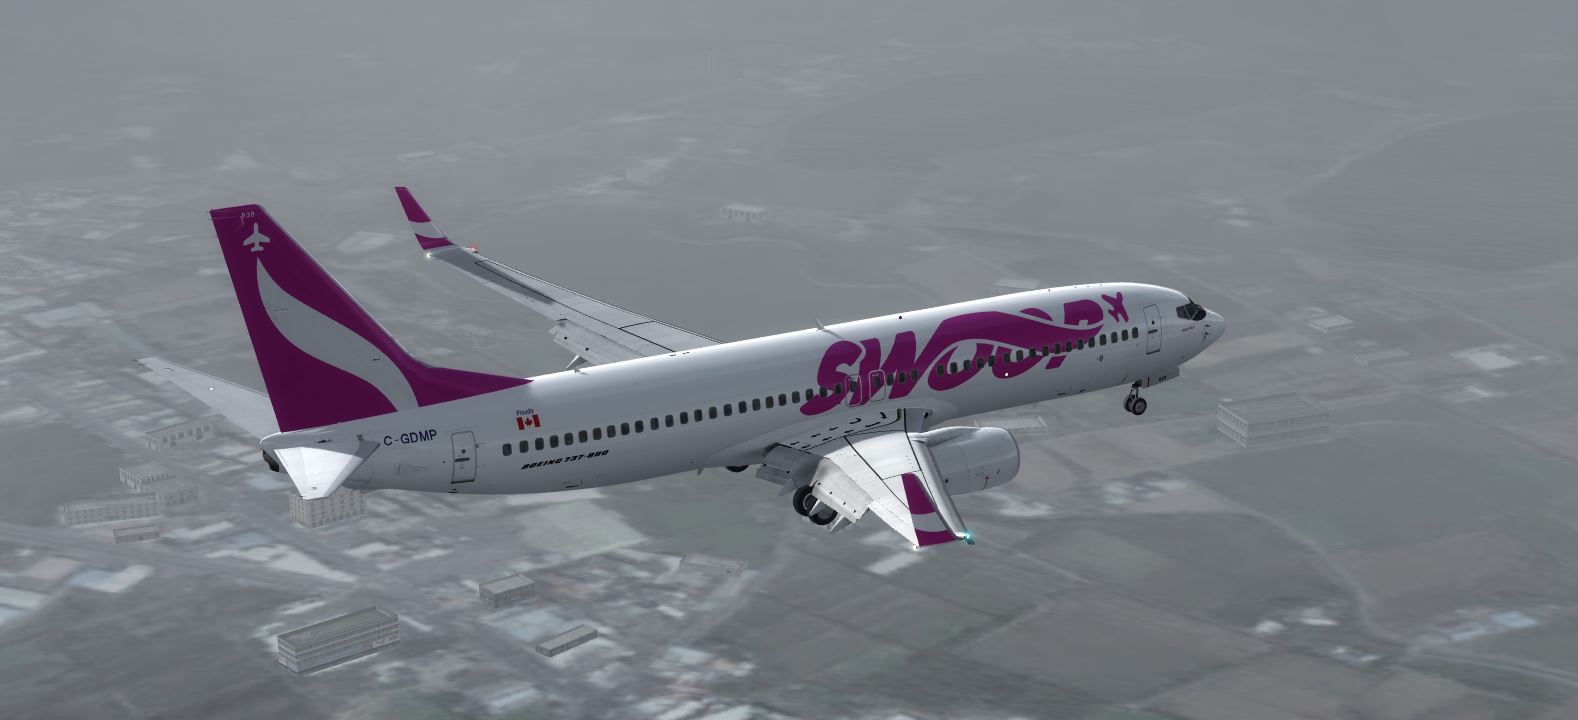 B737-800 Swoop Airlines-2198 